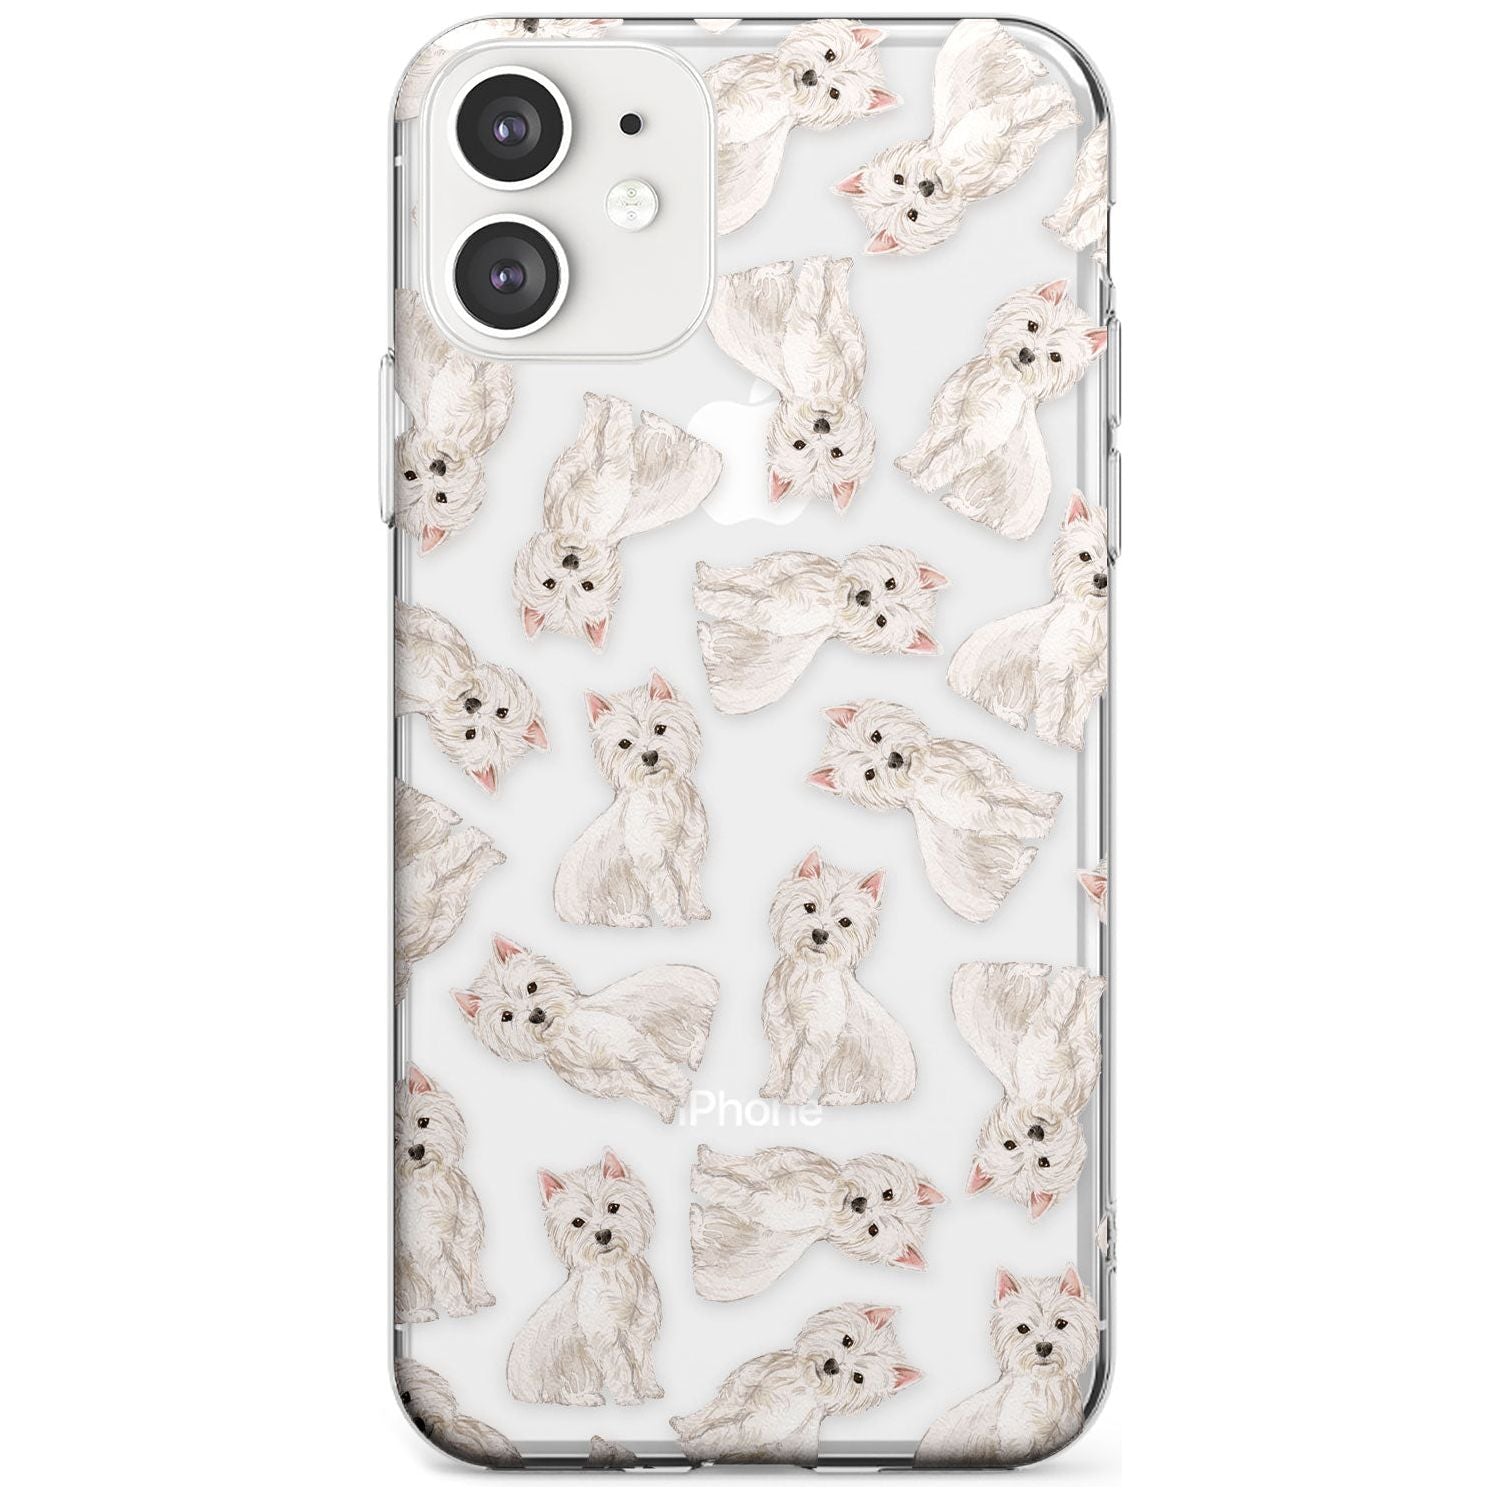 Westie Watercolour Dog Pattern Slim TPU Phone Case for iPhone 11